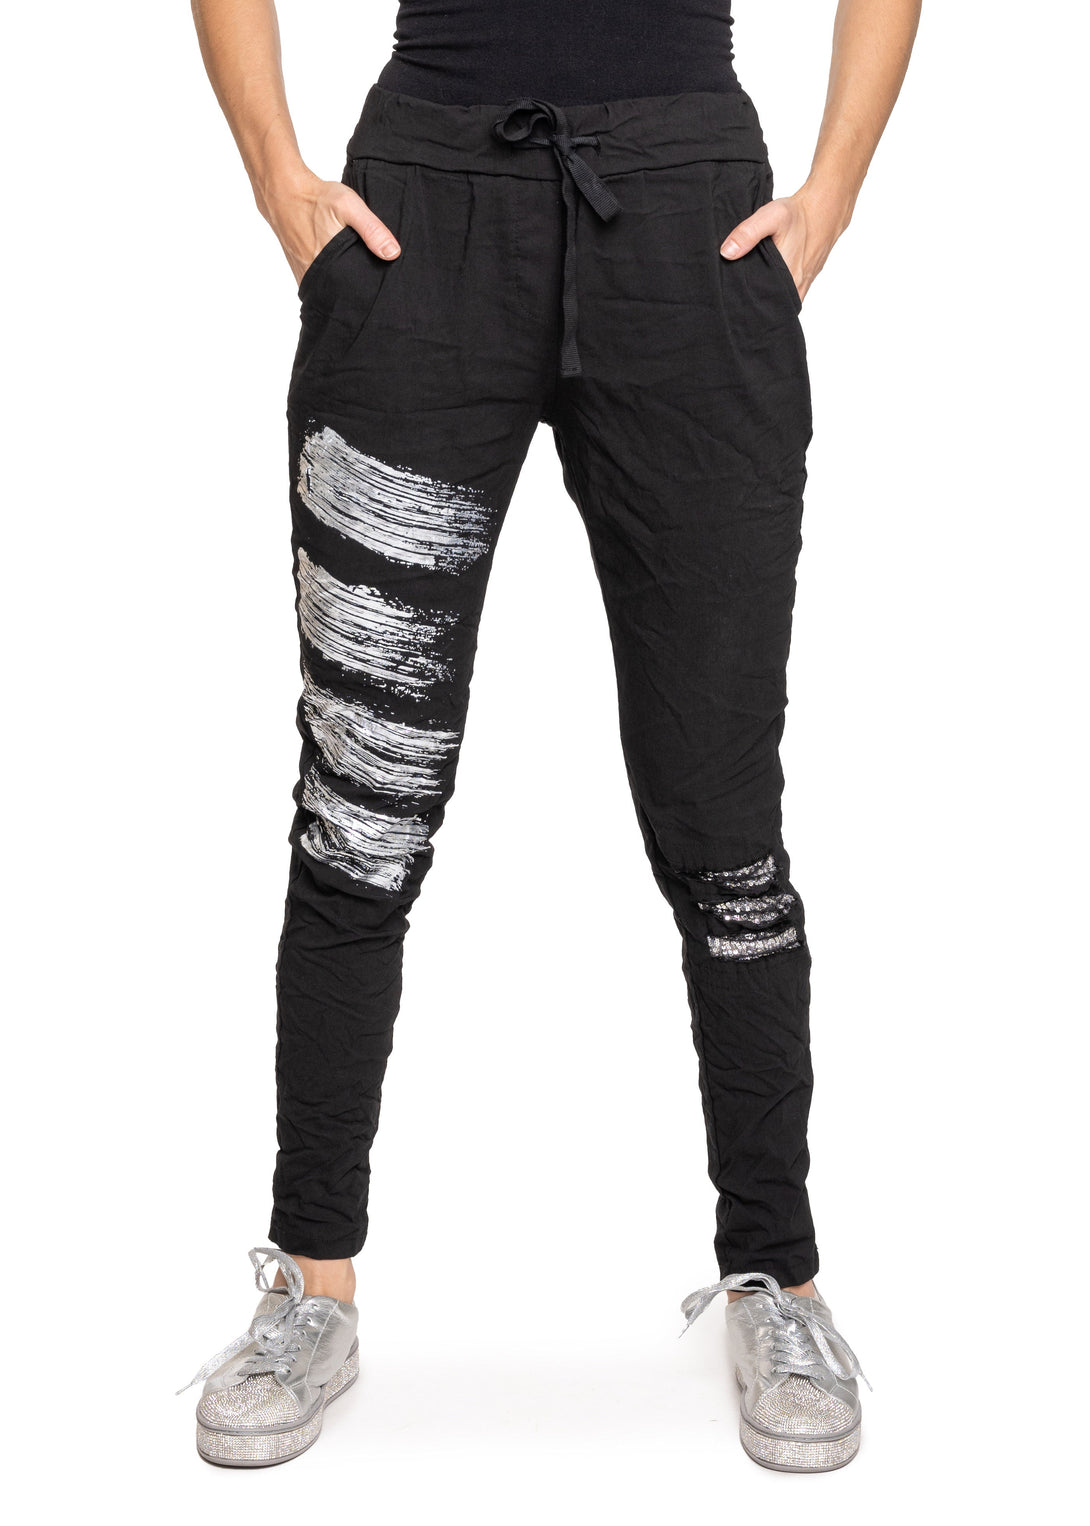 Easton Pants in Onyx - Imagine Fashion